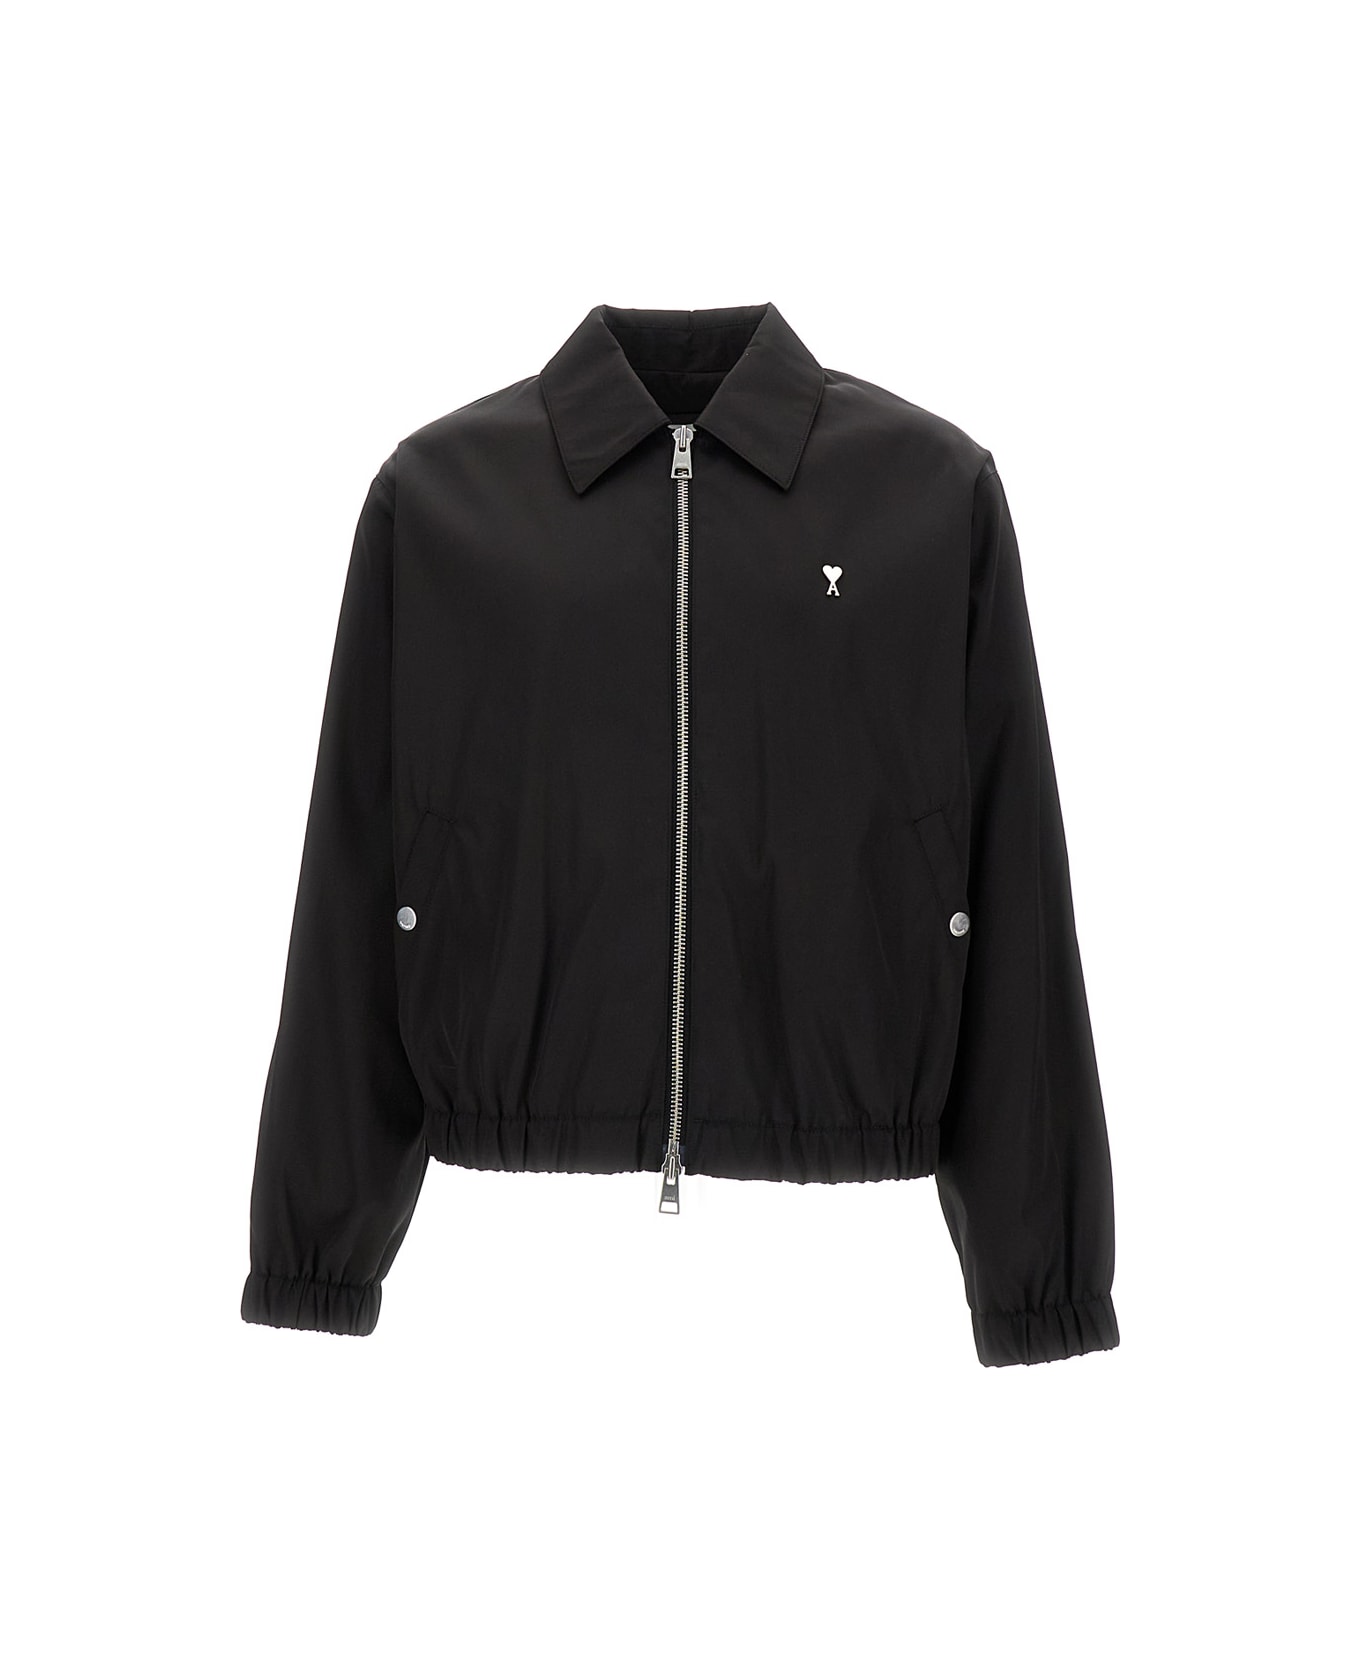 Ami Alexandre Mattiussi Black Jacket With Adc Logo In Cotton Blend Man - Black